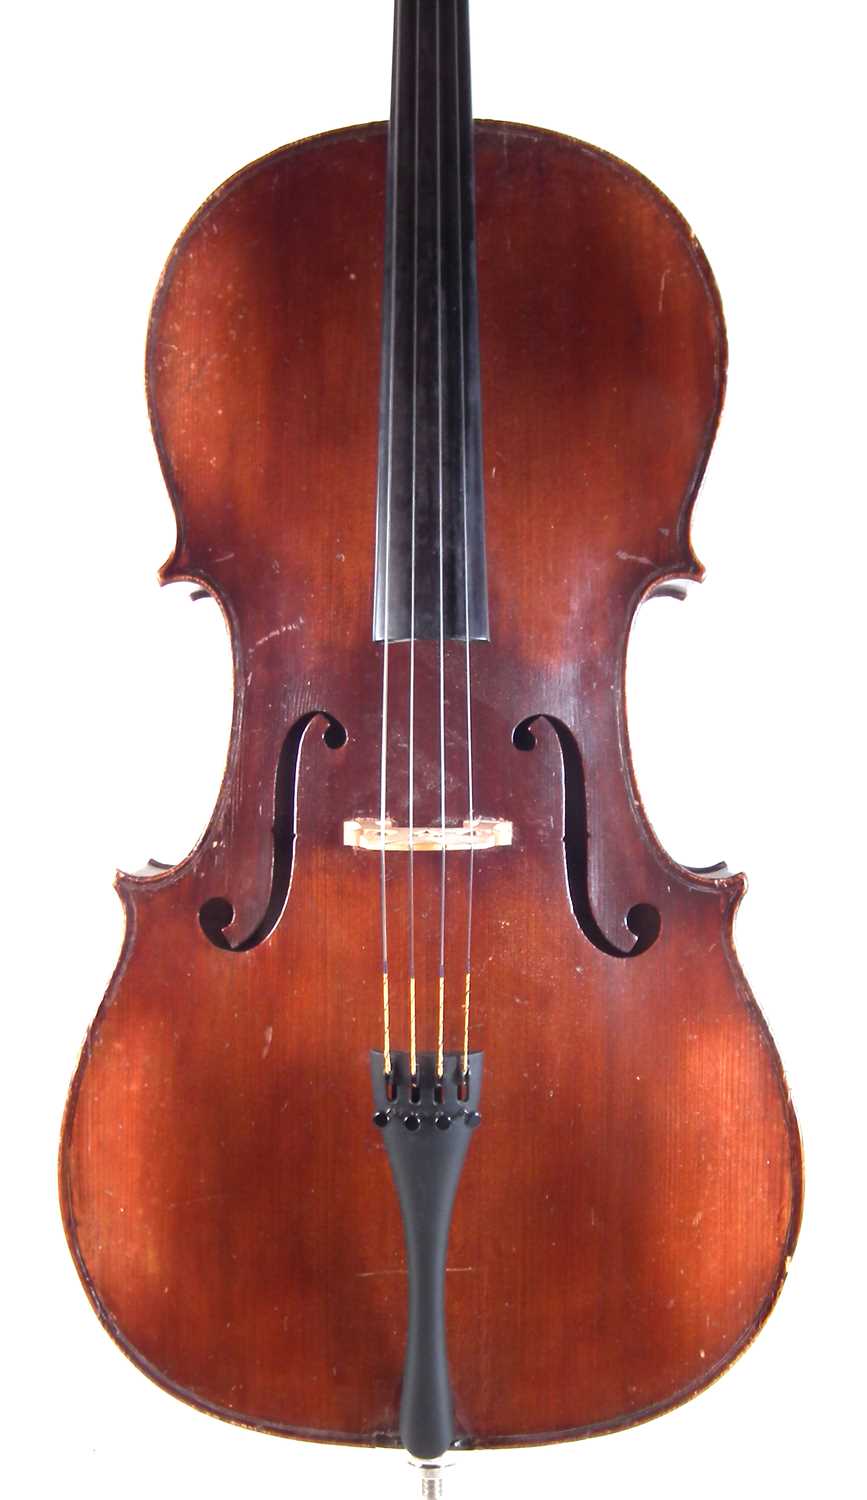 Lot 12 - Cello